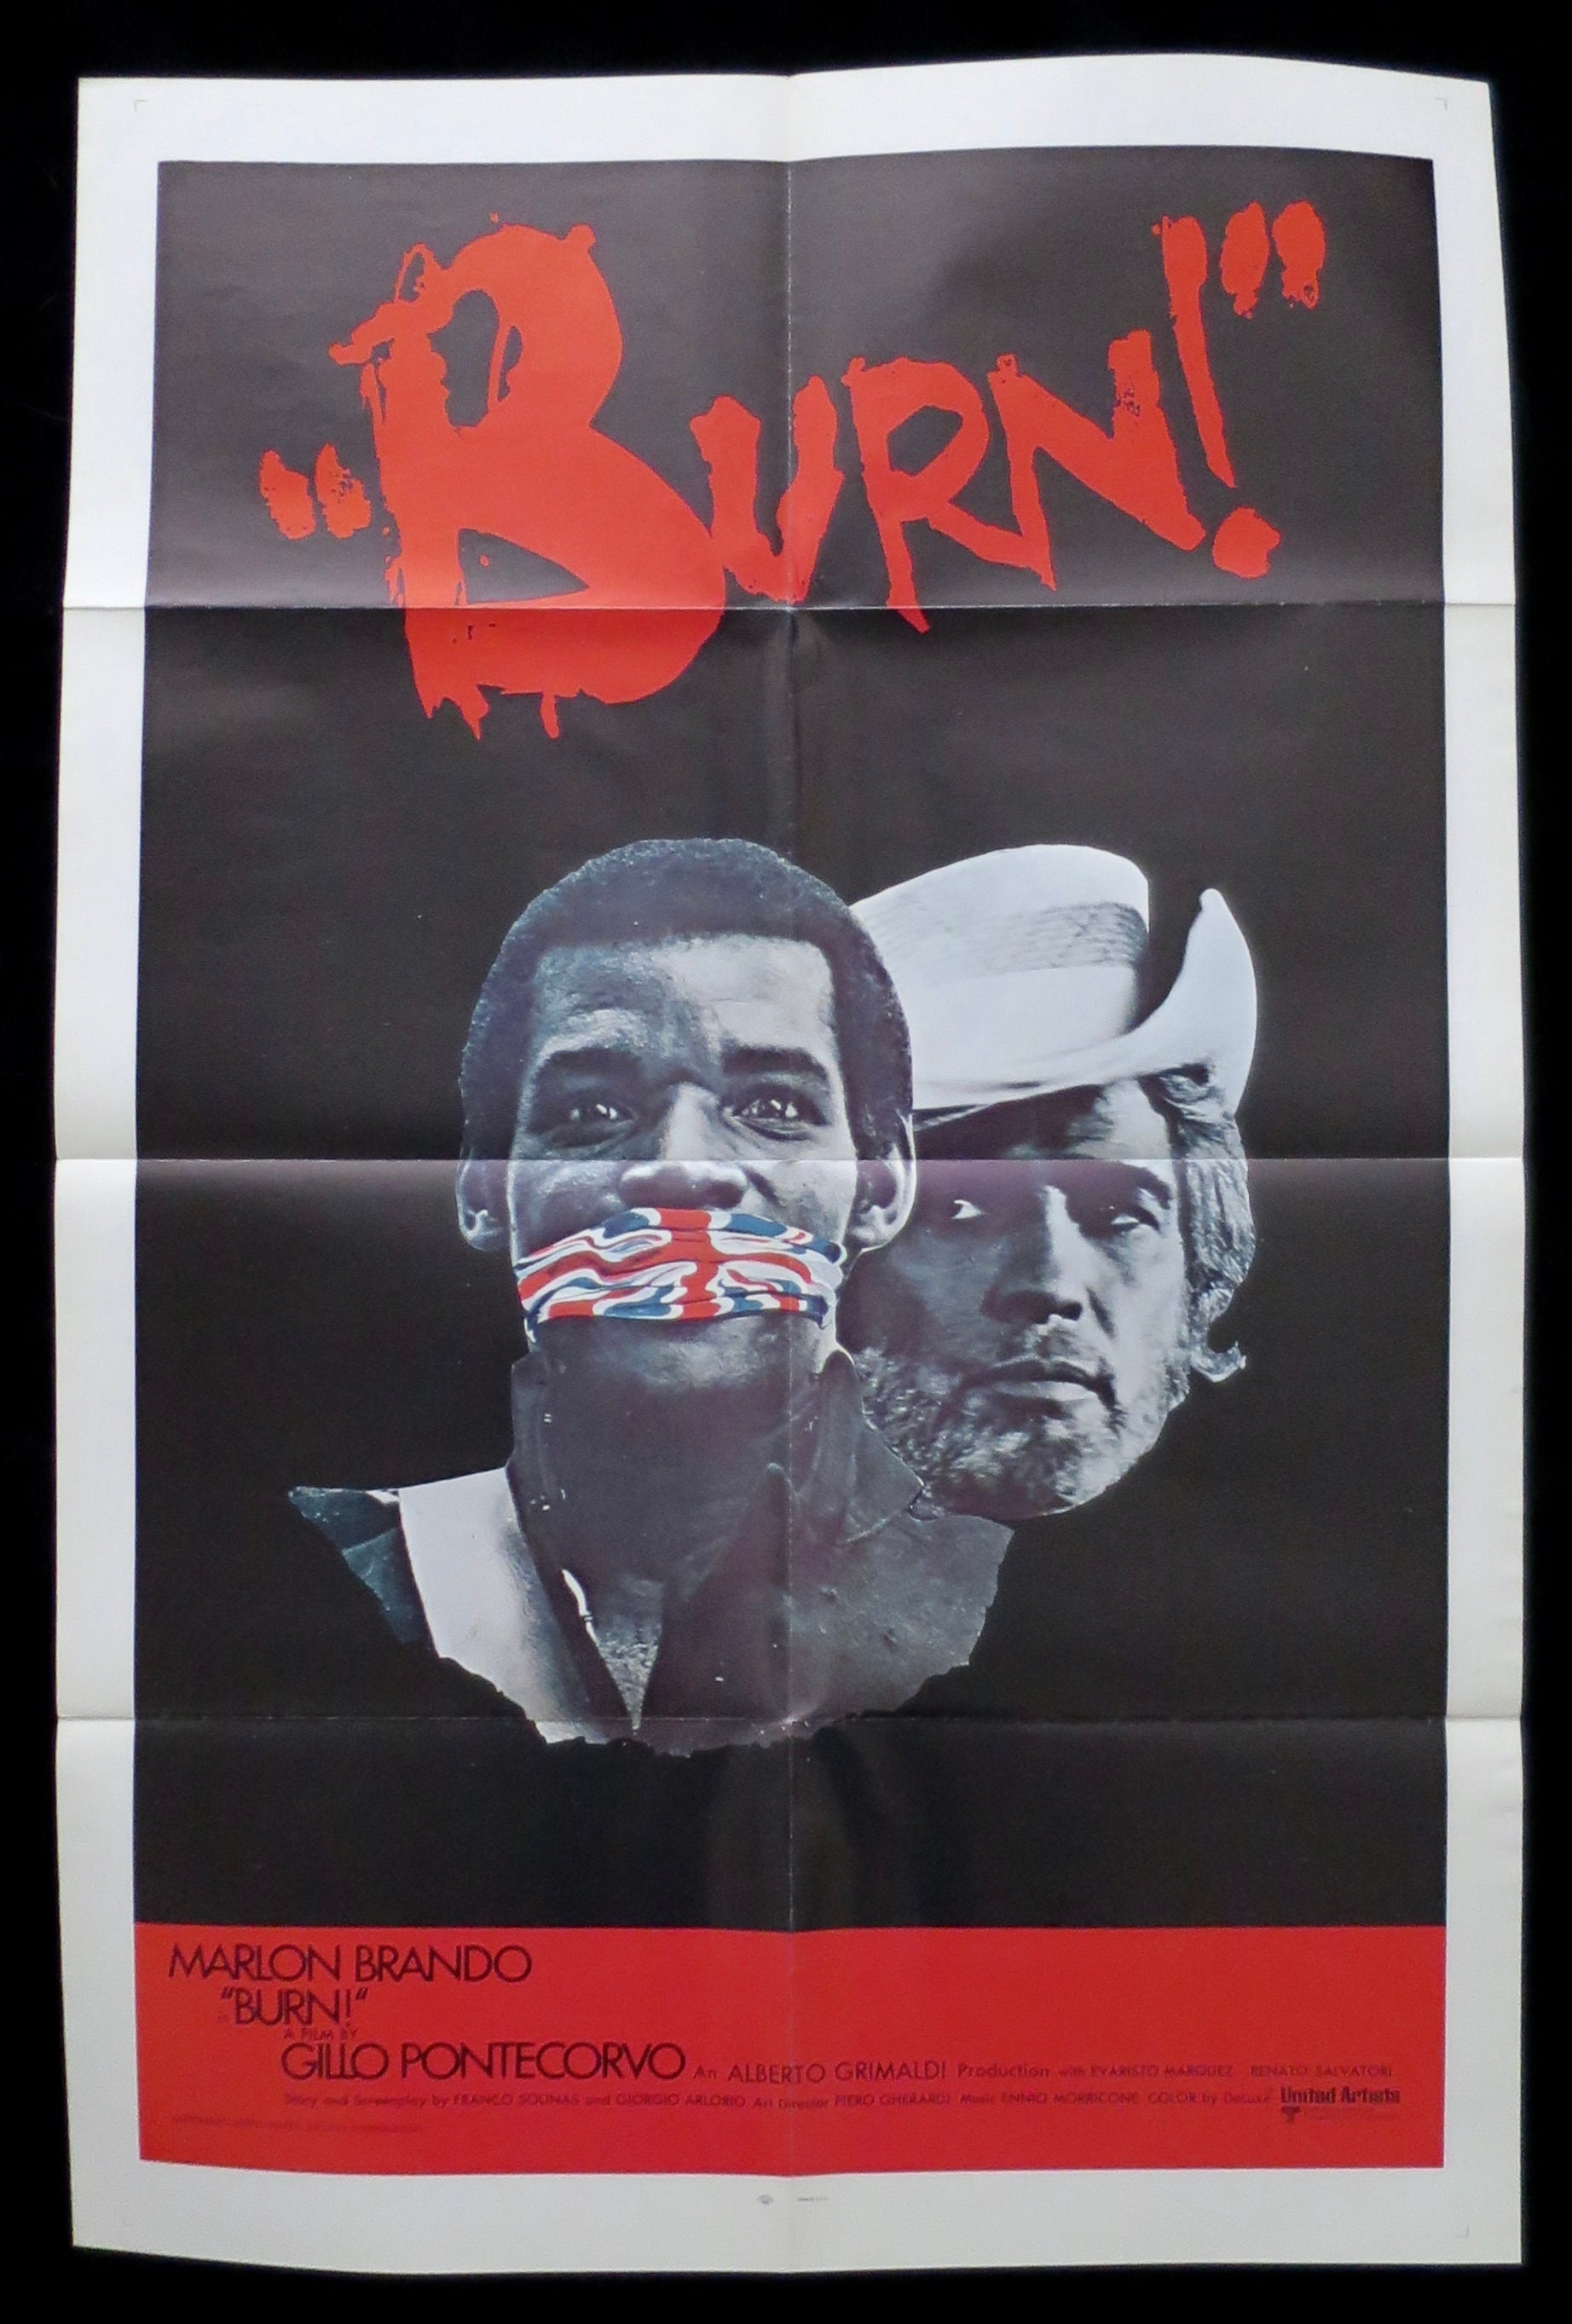 BURN! MARLON BRANDO - Original US 1 Sheet Movie Poster 1970 - International Vers 27x41 in Very Fine to Fine Condition!